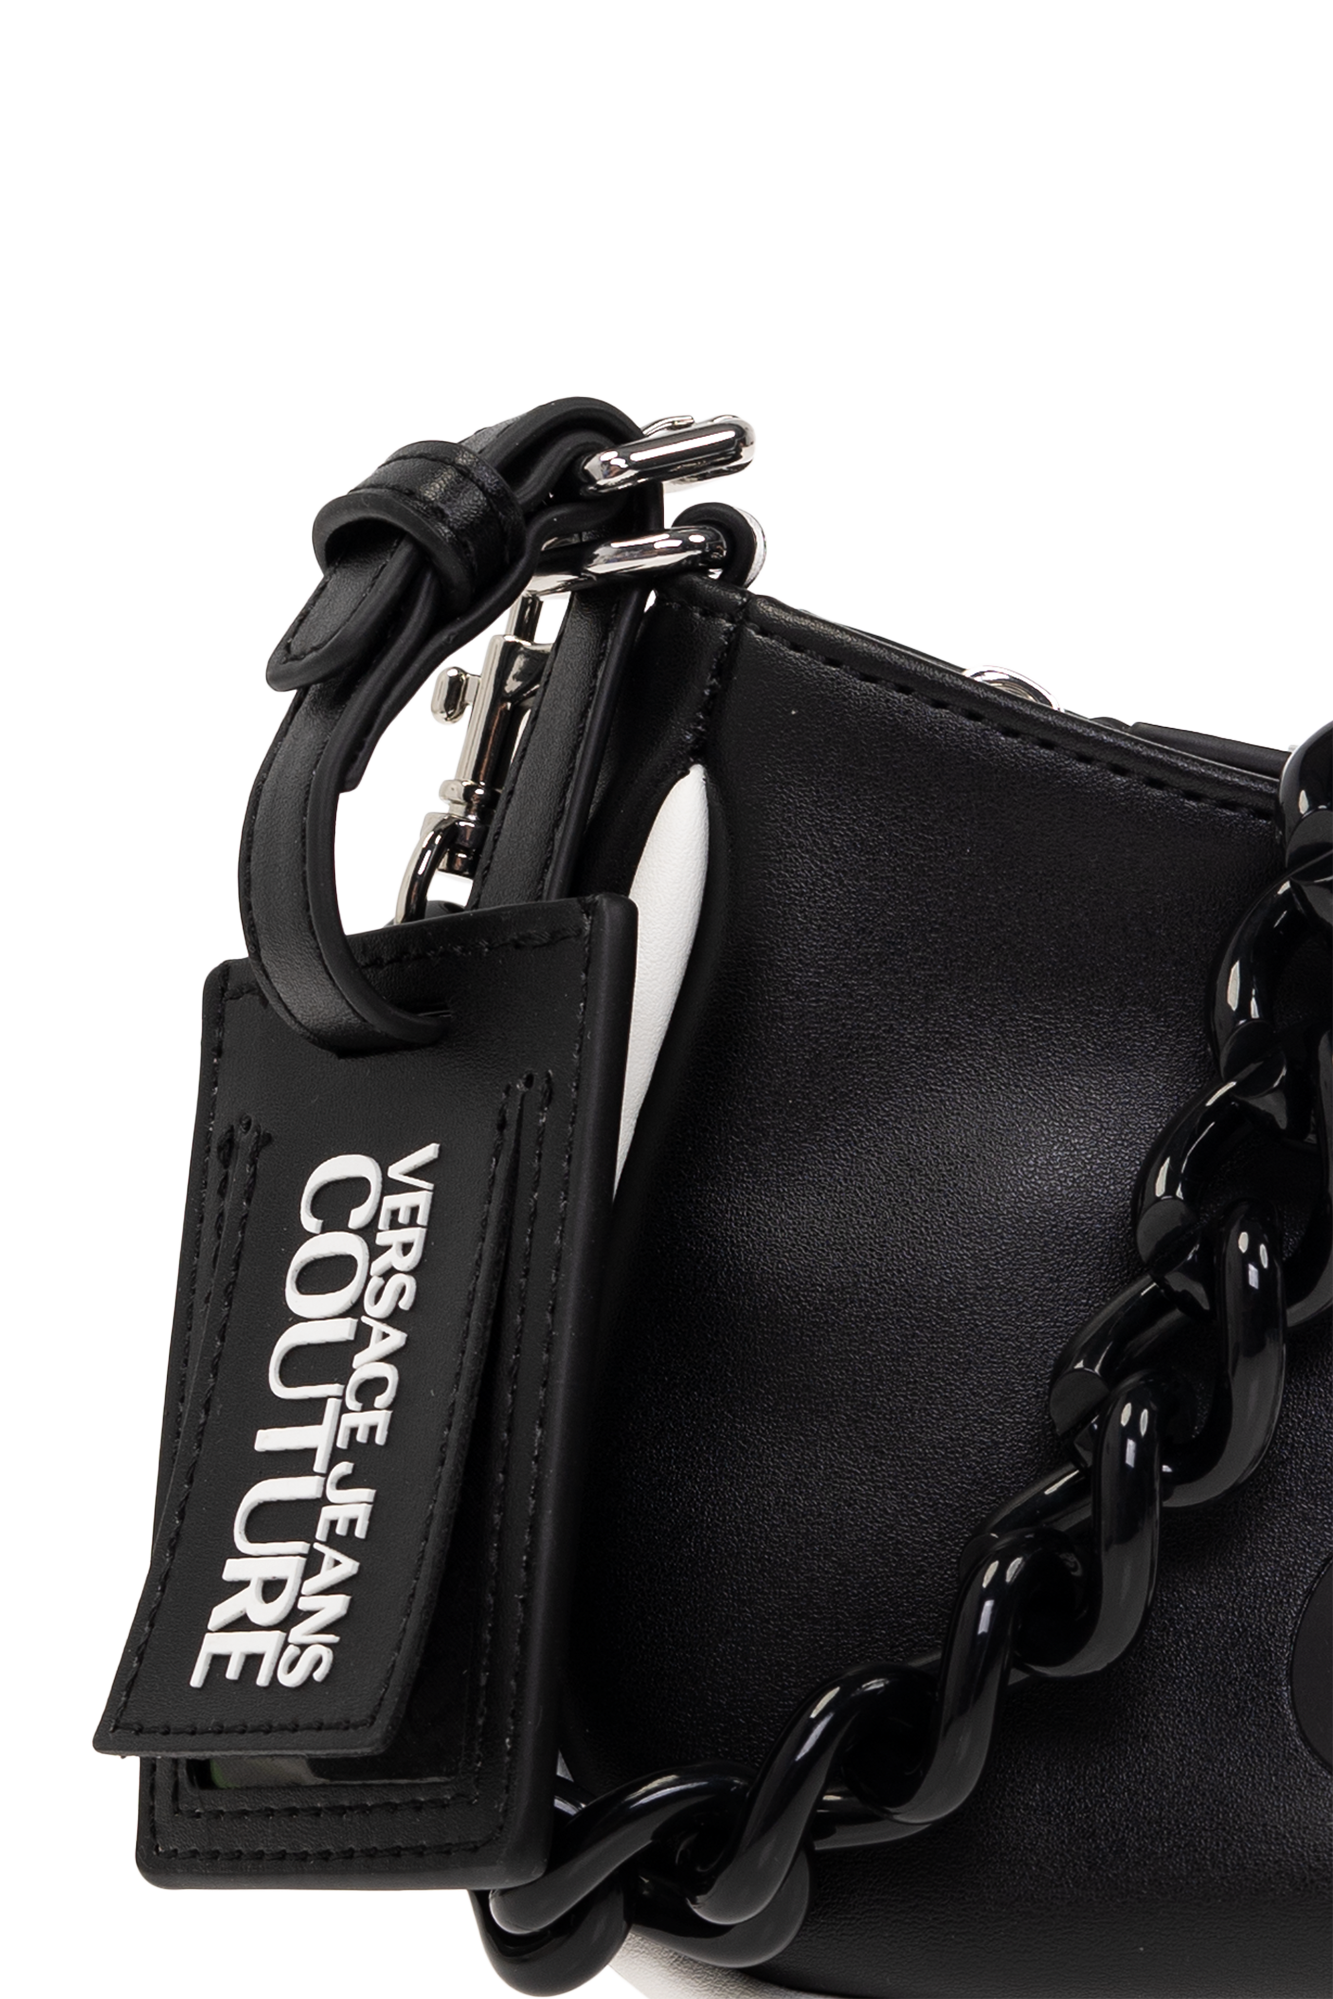 Versace Jeans Couture logo-embellished faux-leather Shoulder Bag